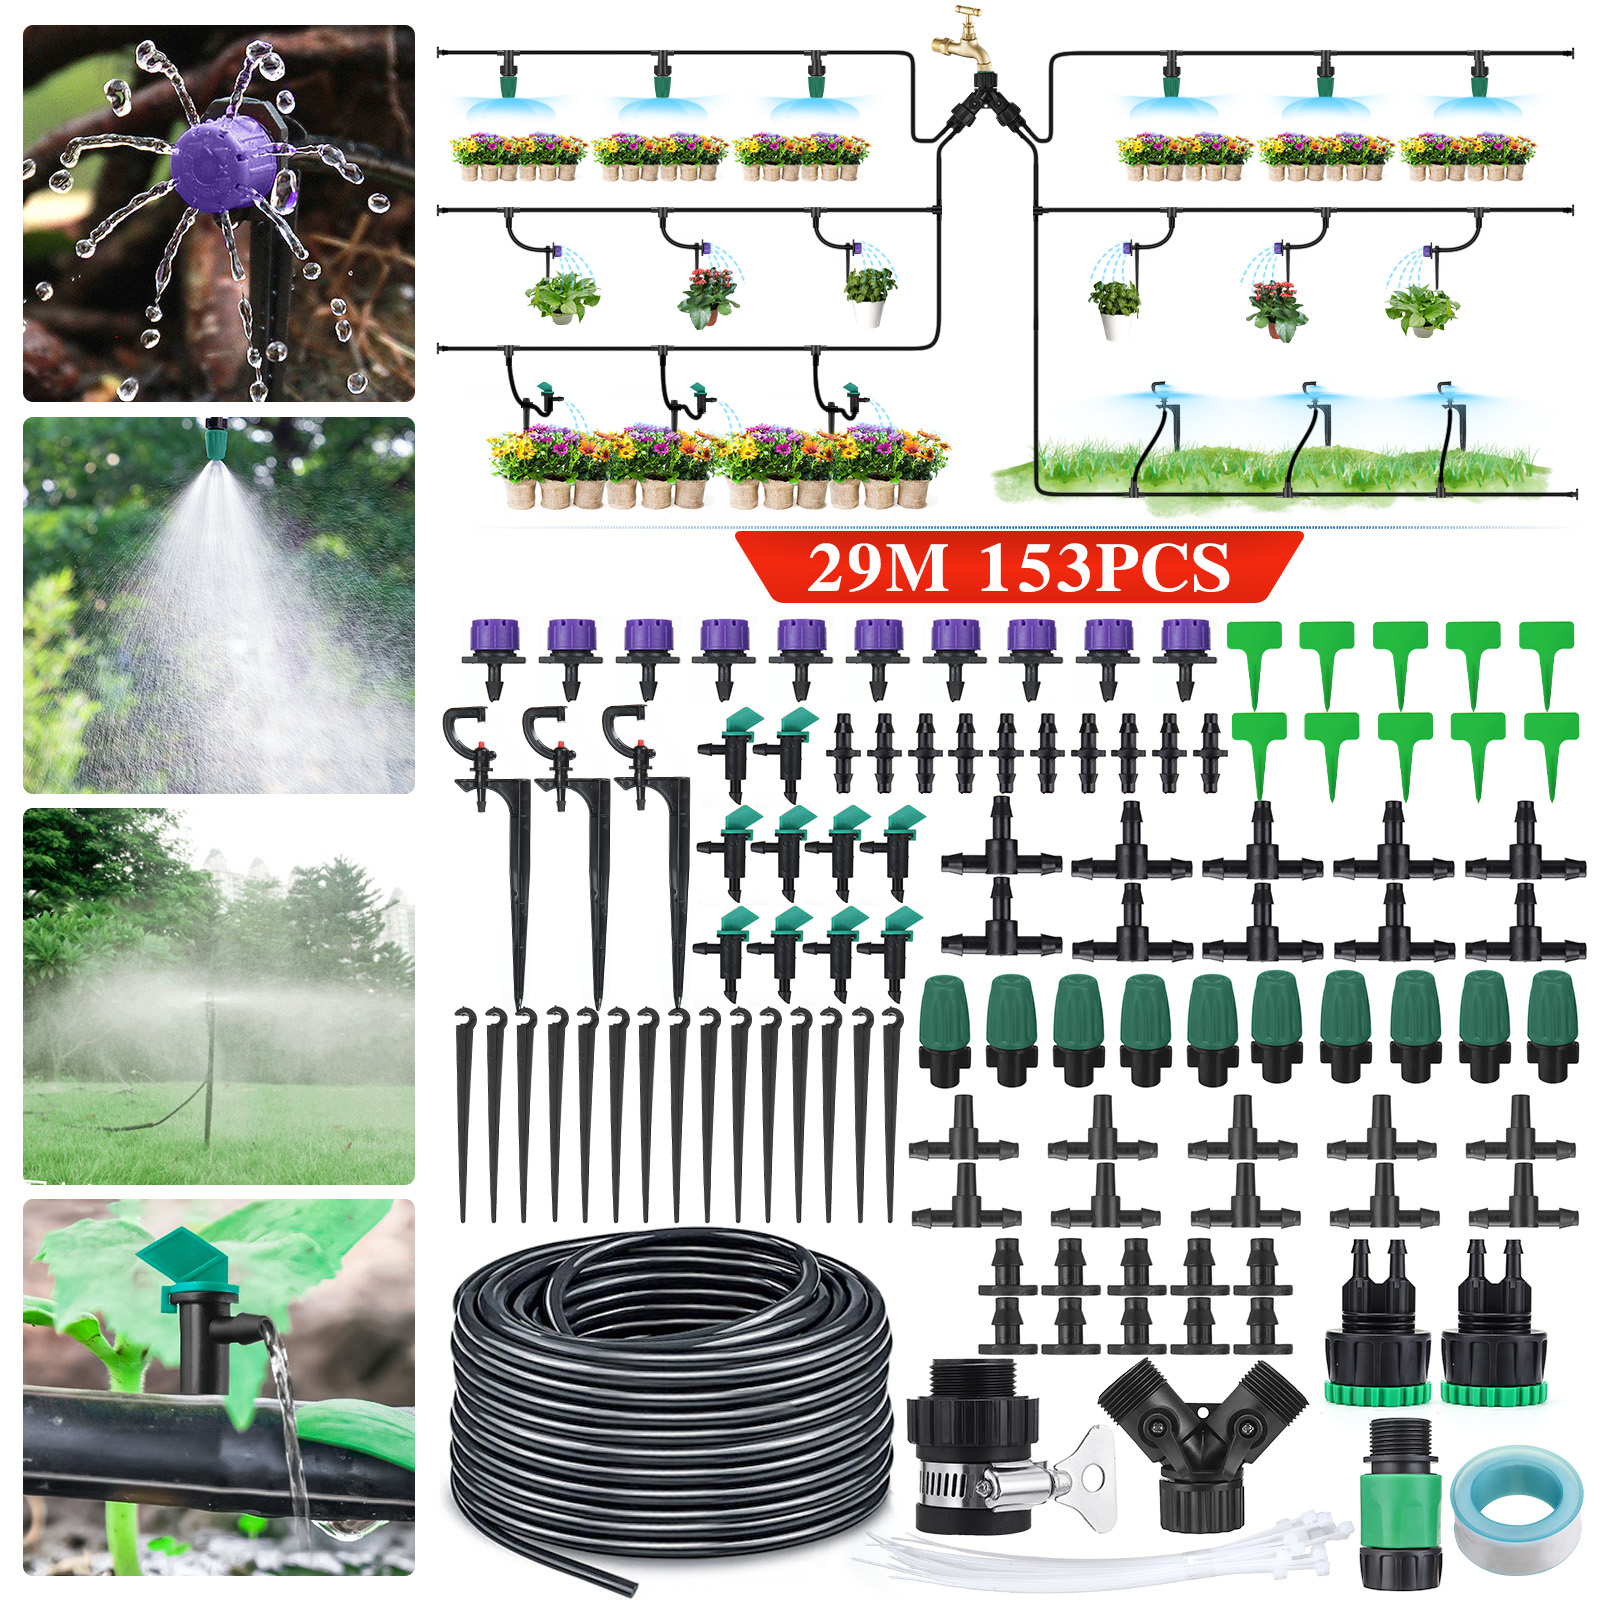 GOTGELIF-29M-153PCS-Drip-Irrigation-Kit-Automatic-Sprinkler-DIY-Garden-Watering-Micro-Drip-Irrigatio-1885680-1